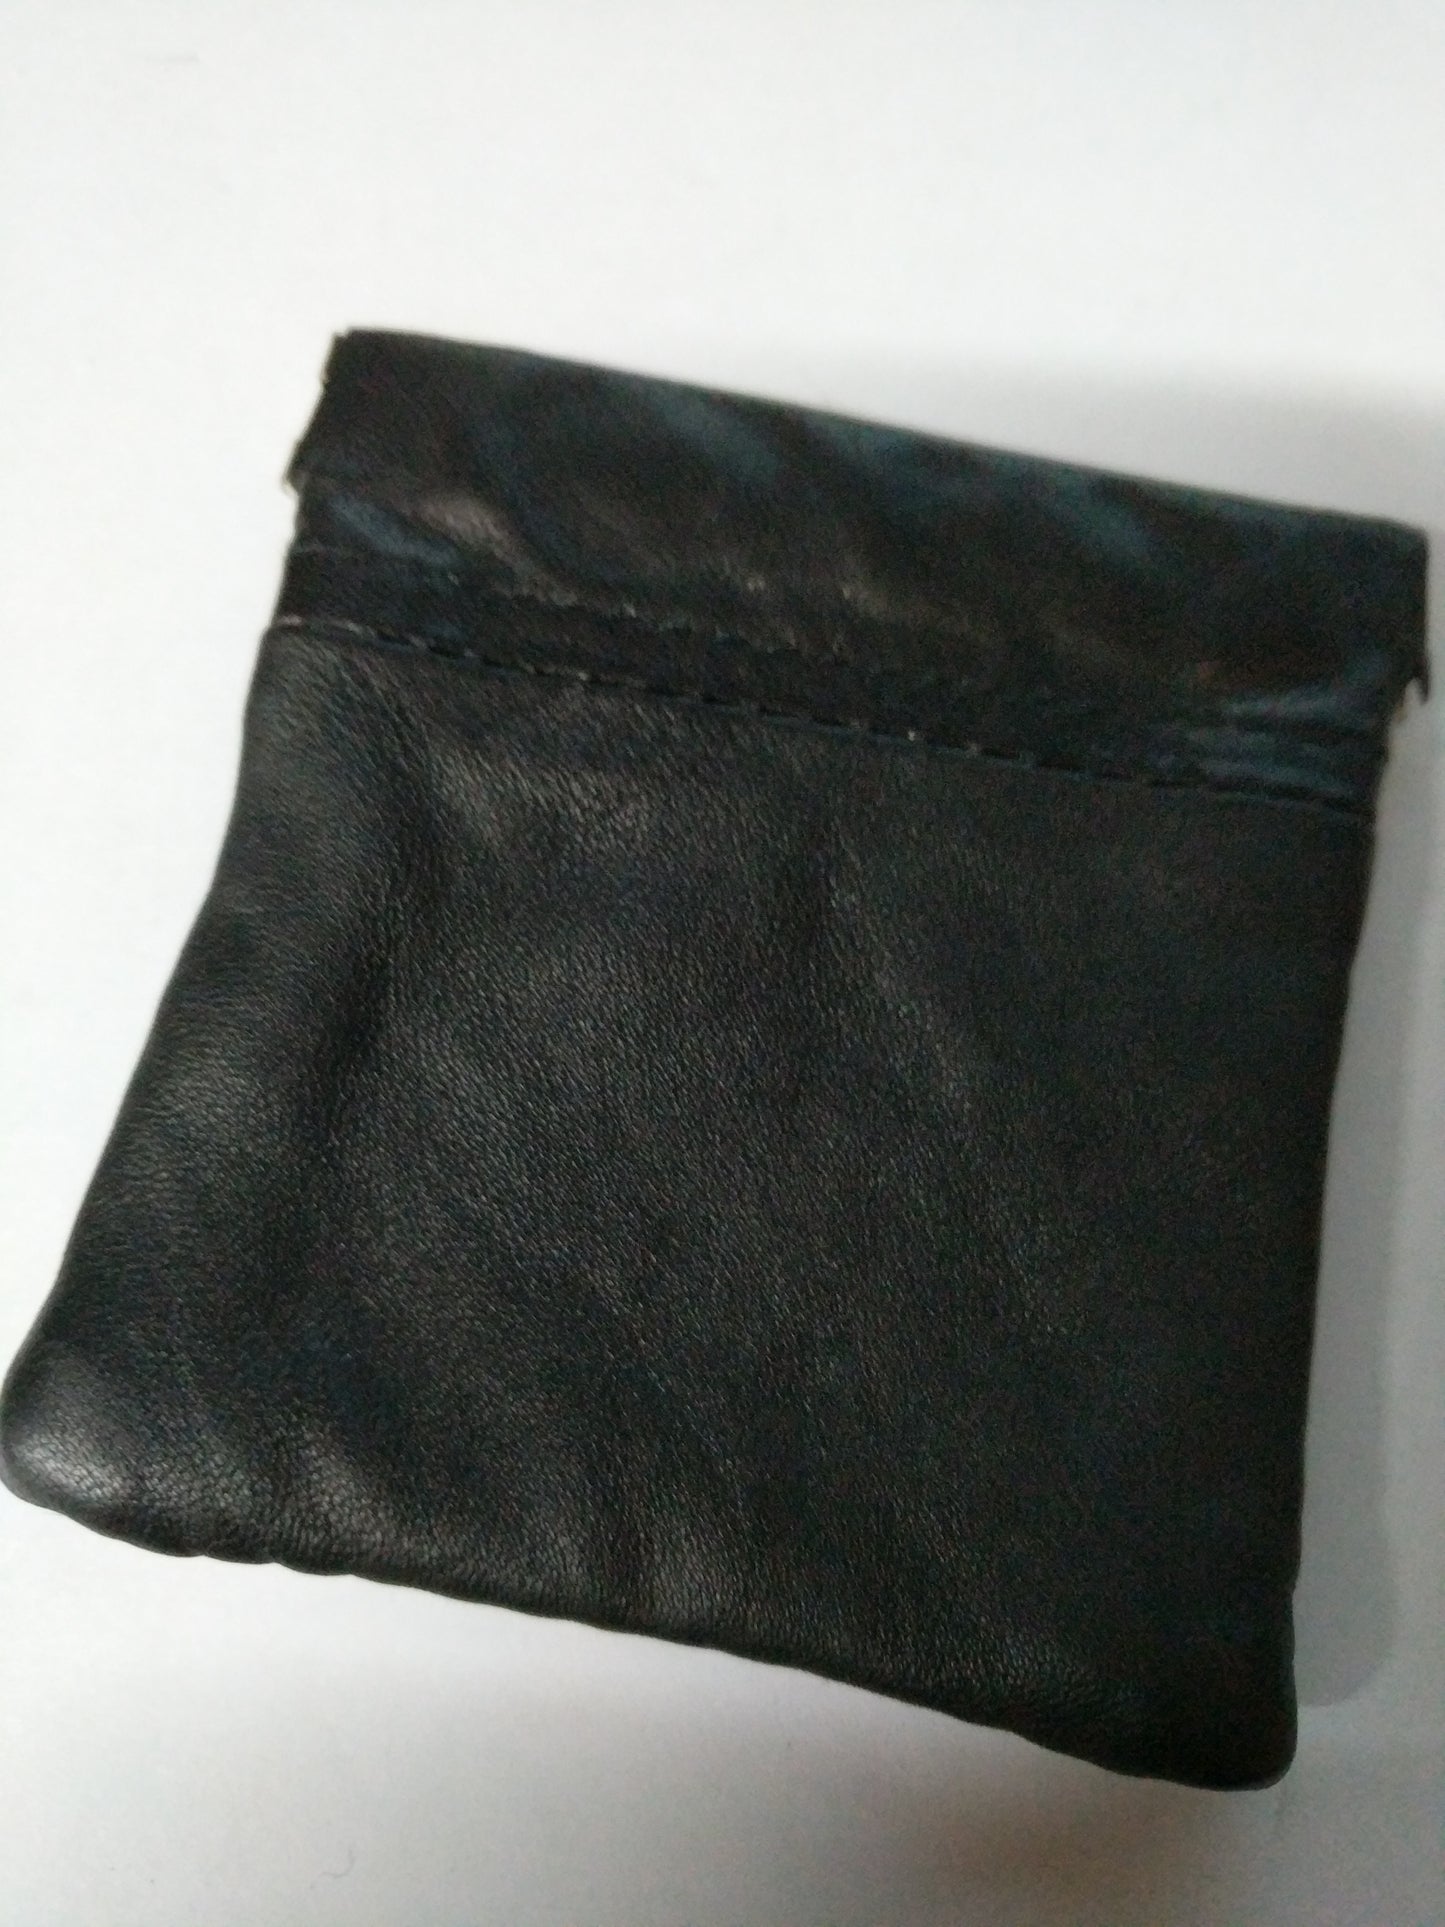 Leather SNAP CLOSE change wallet purse Black (1476)